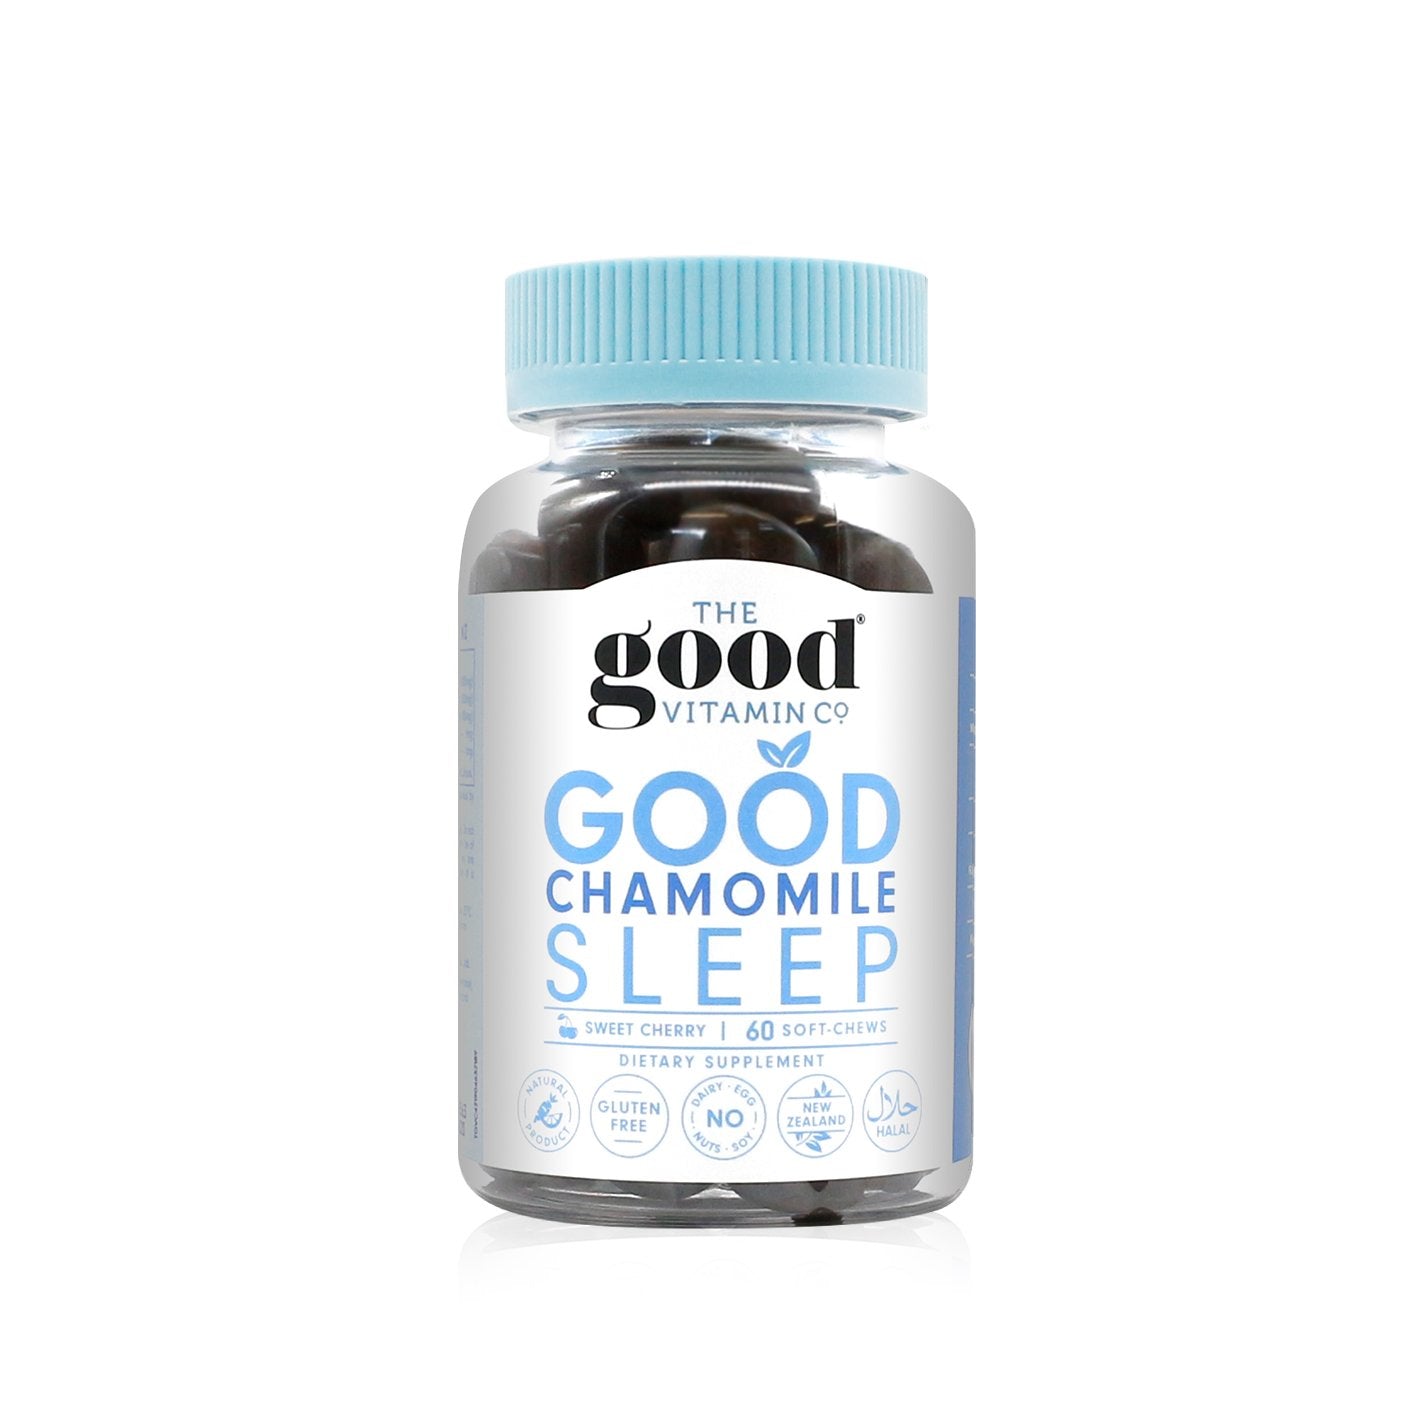 The Good Vitamin Co. Good Chamomile Sleep